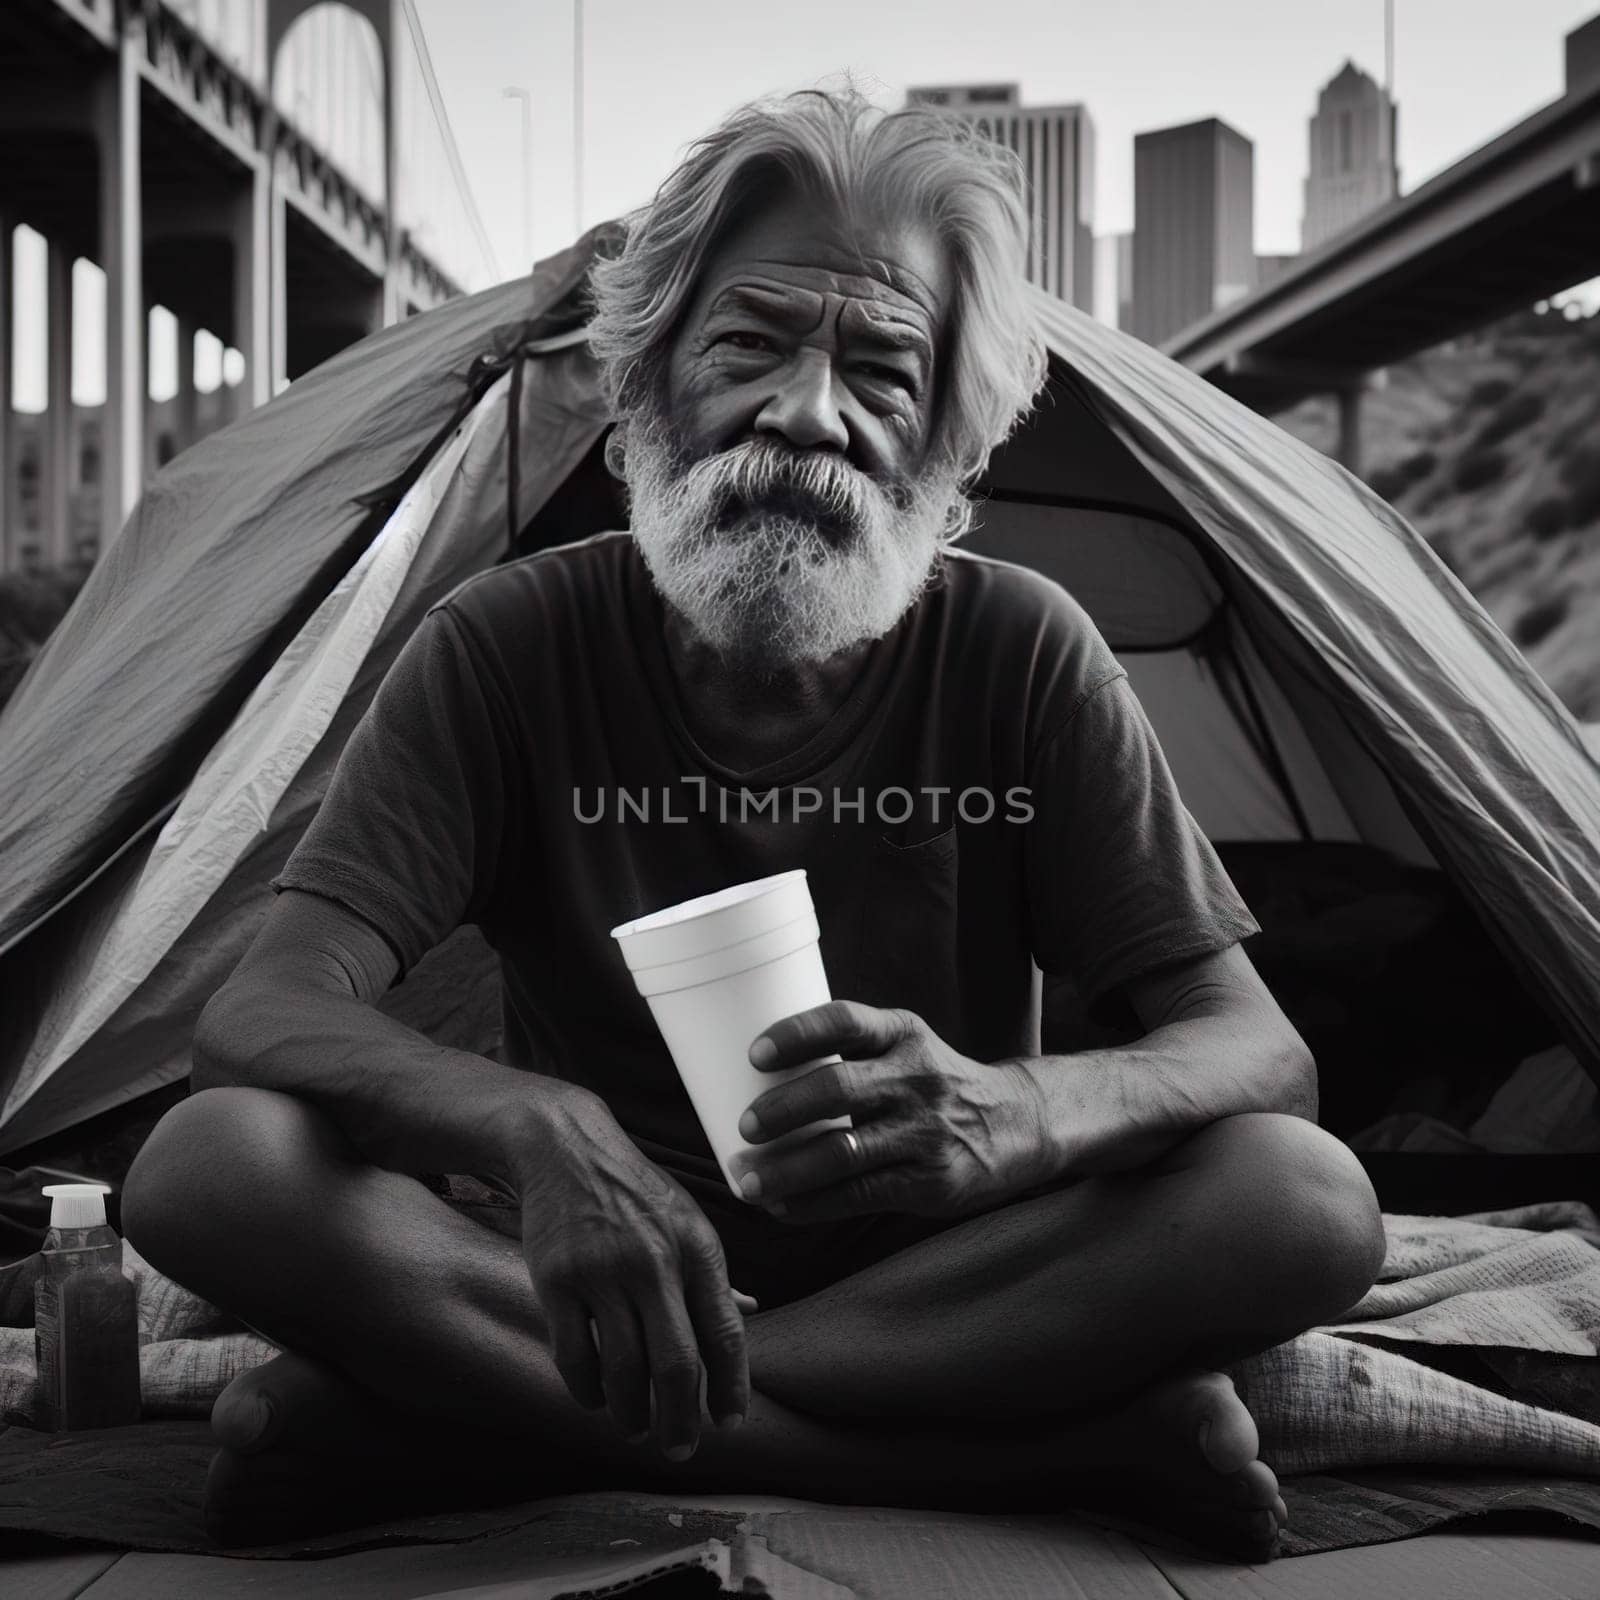 Homeless man under the bridge. generative, AI. High quality illustration